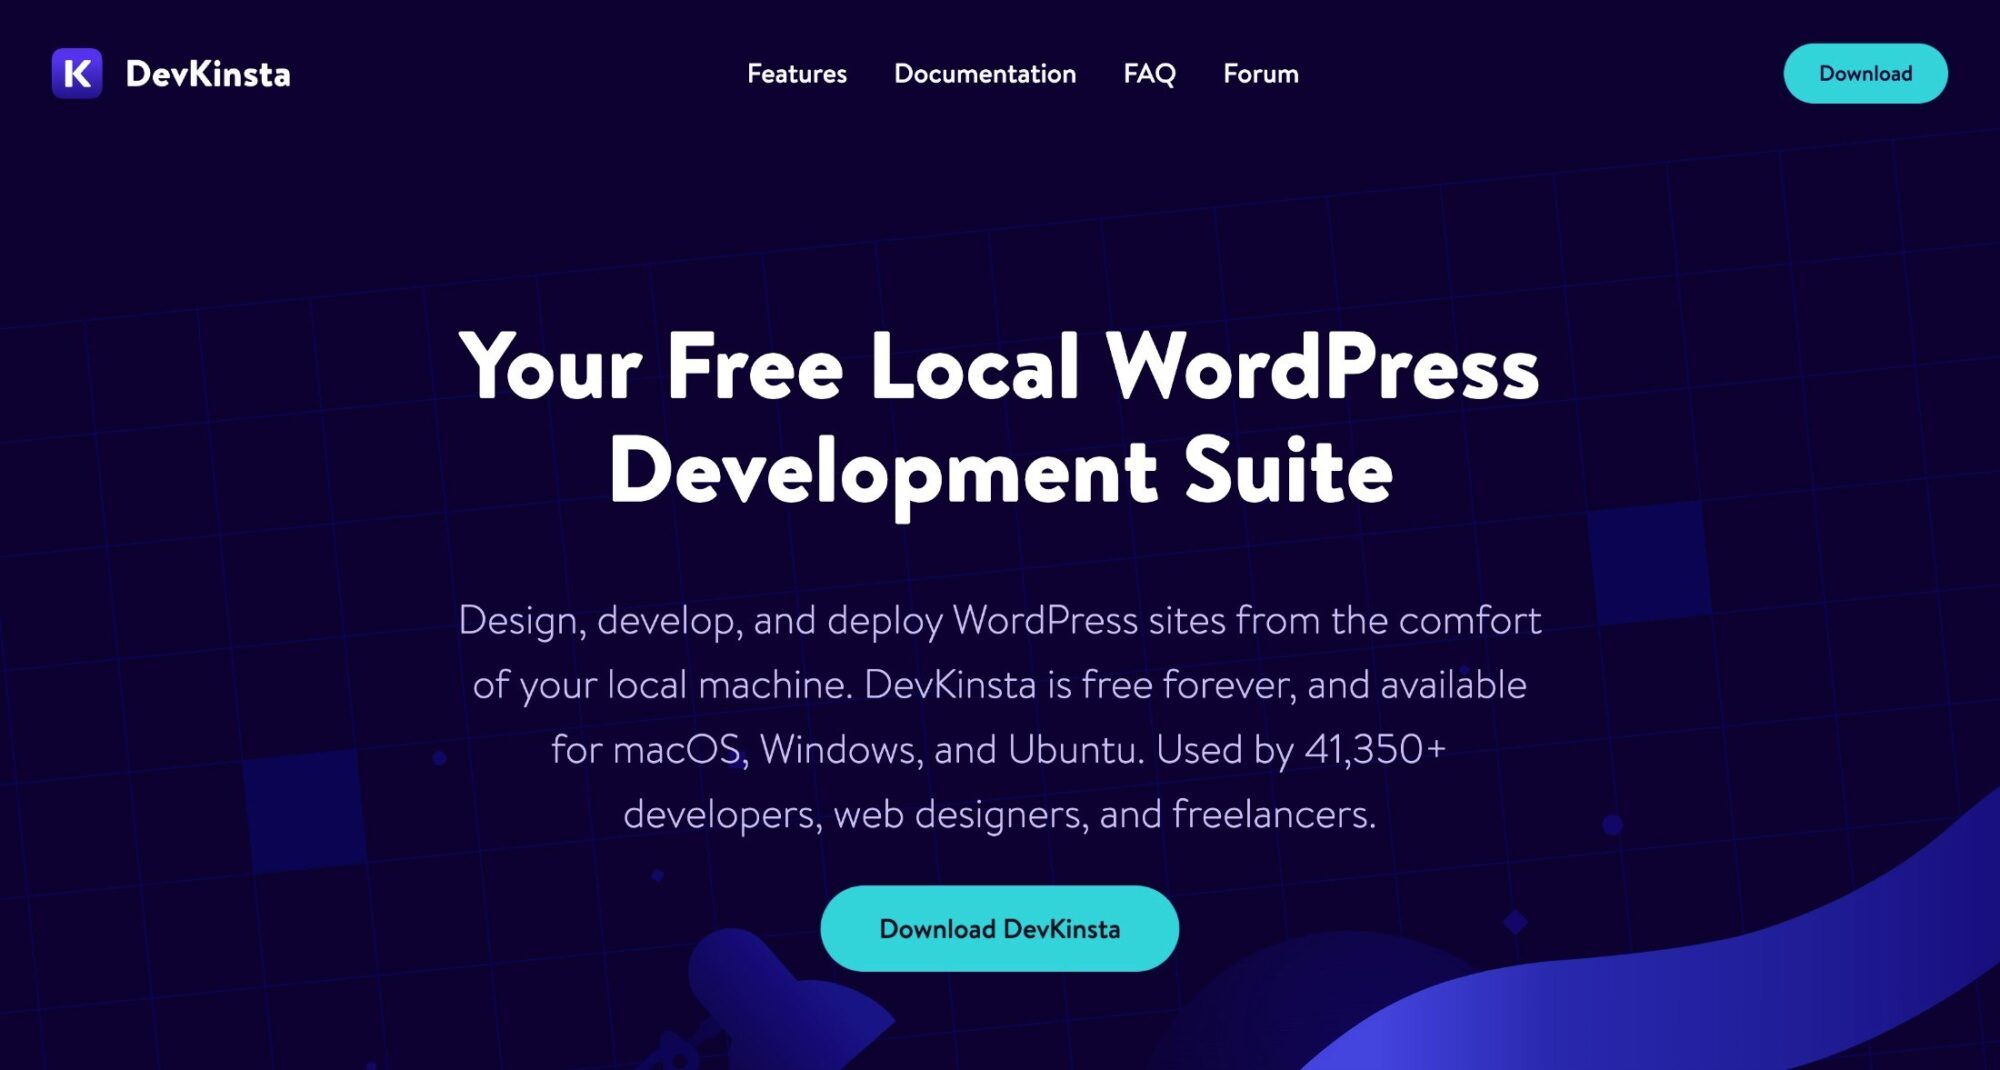 Kinsta offer a free local WordPress development tool named DevKinsta.